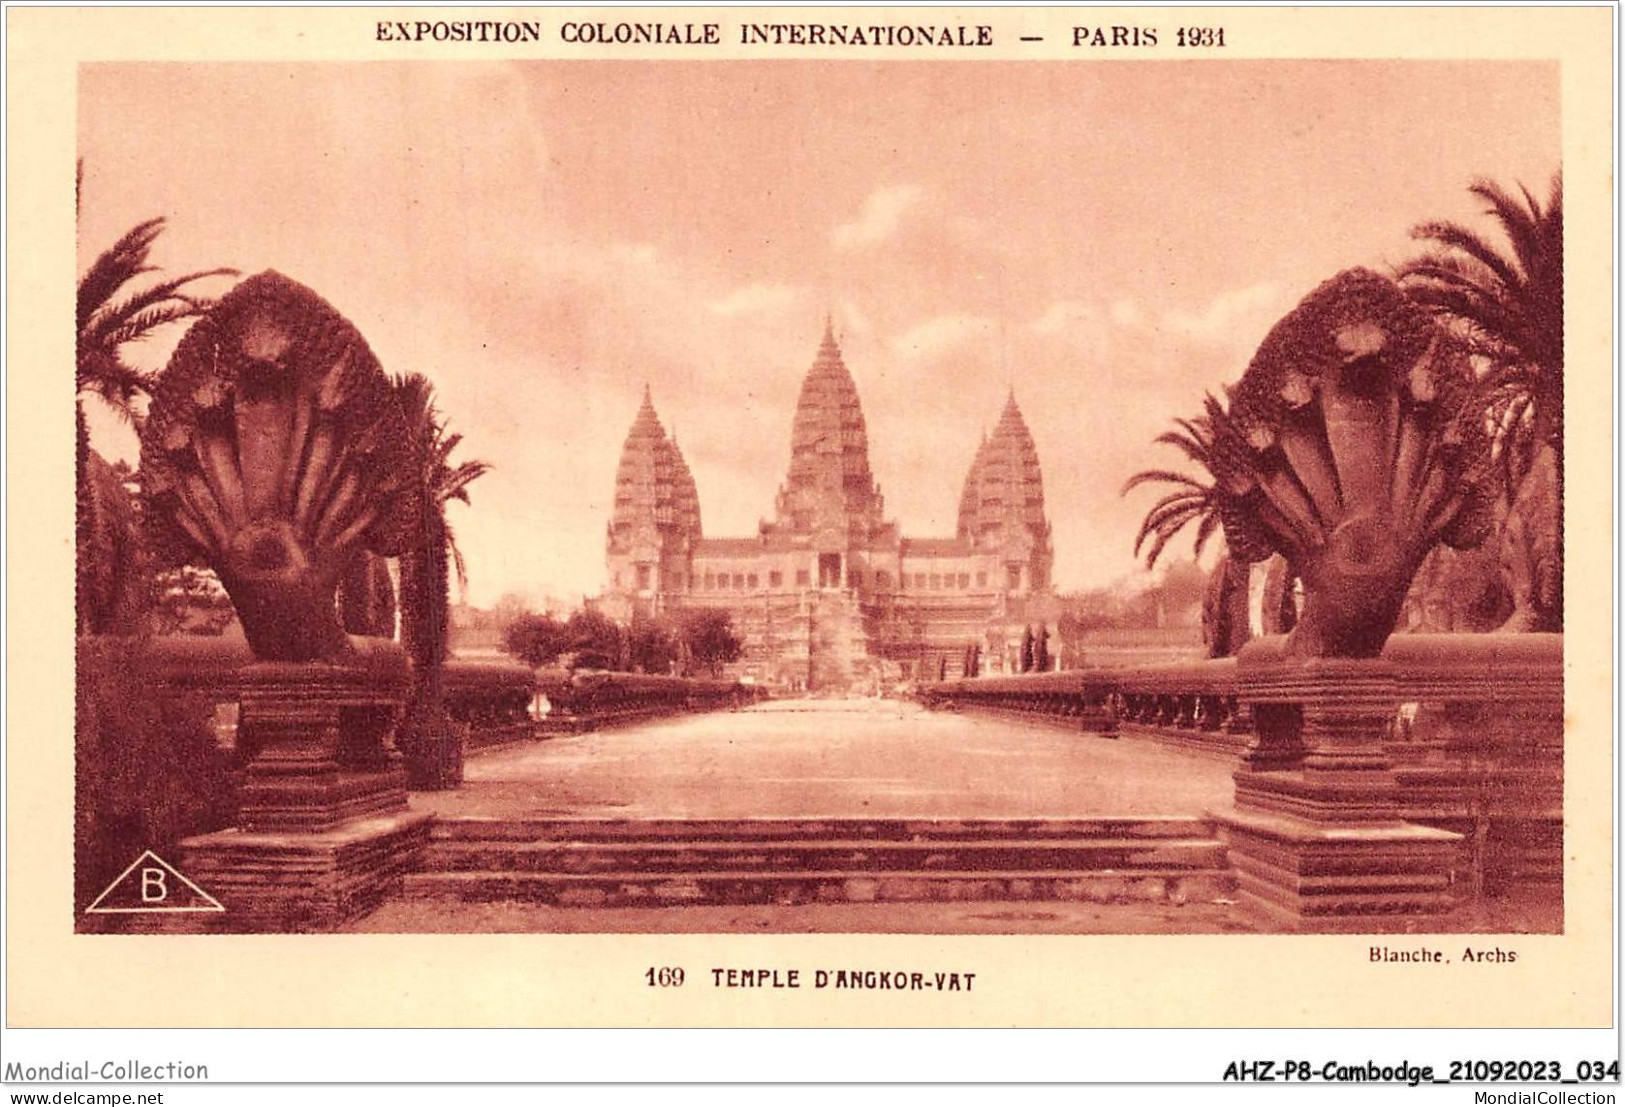 AHZP8-CAMBODGE-0700 - EXPOSITION COLONIALE INTERNATIONALE - PARIS 1931 - TEMPLE D'ANGKOR-VAT - Cambodge